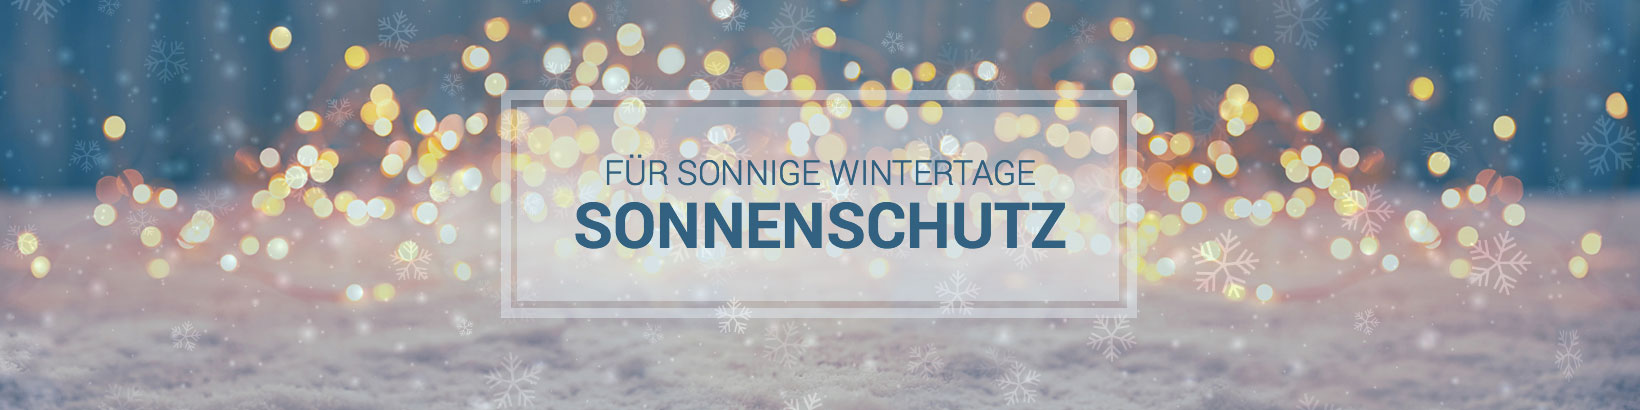 Visual-Winter-Sonnenschutz-1640x410